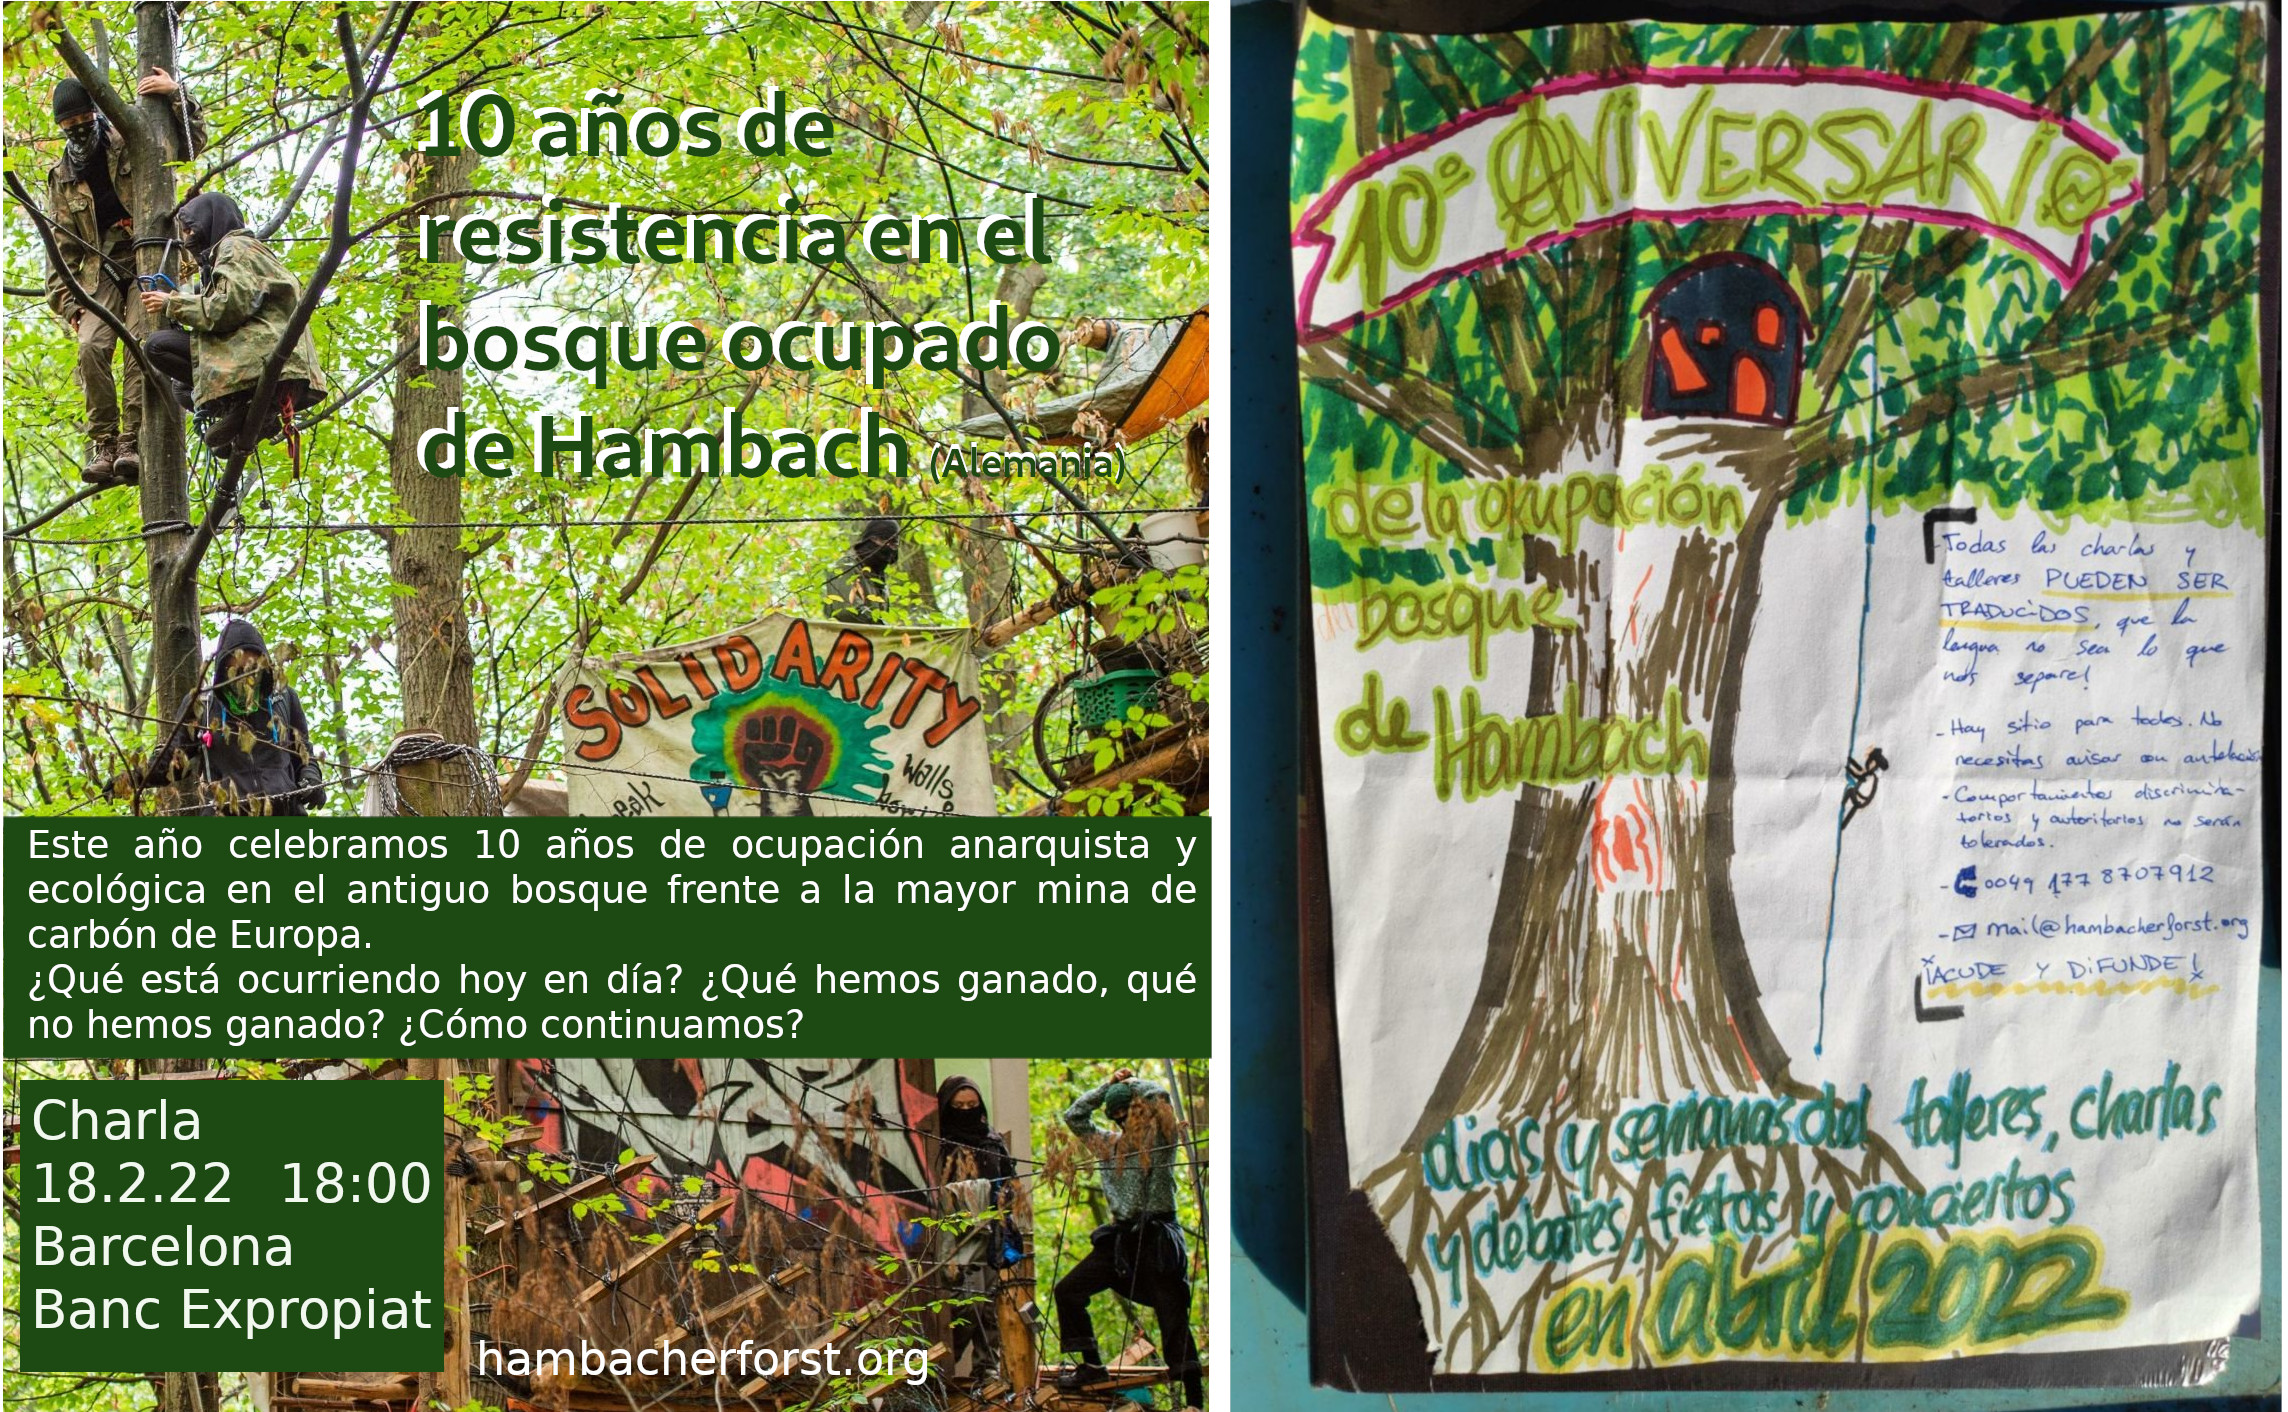 Barcelona 18.2.: Charla sobre resistencia de Hambach